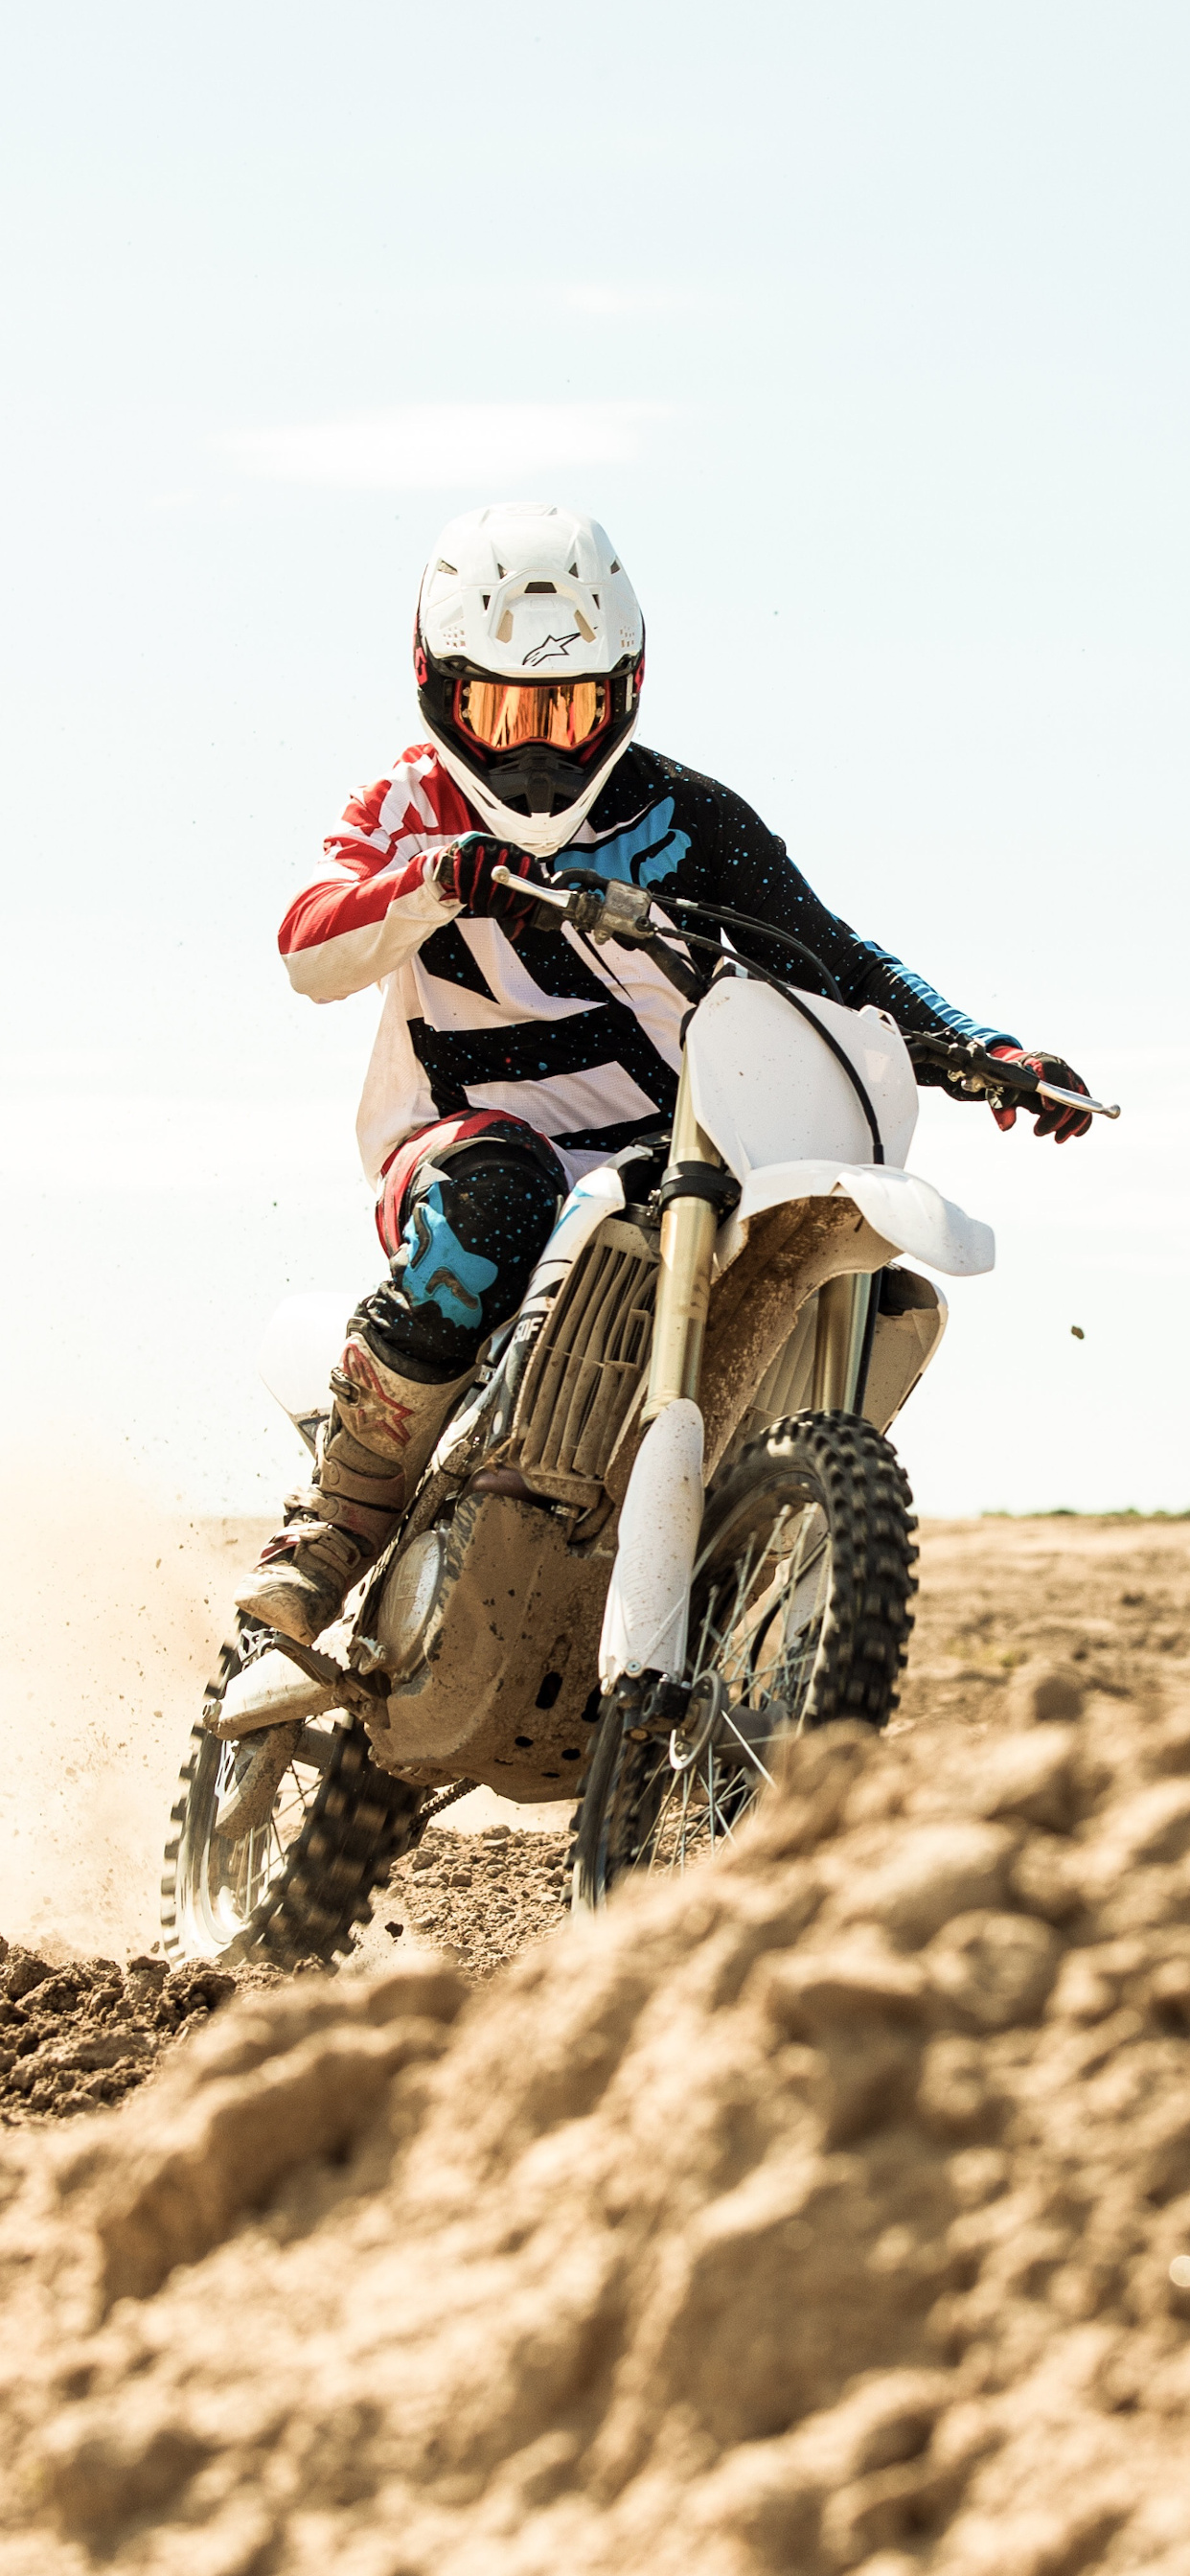 Motocross: Supercross, Riding Between The Rocks, Motorcycling. 1250x2690 HD Wallpaper.